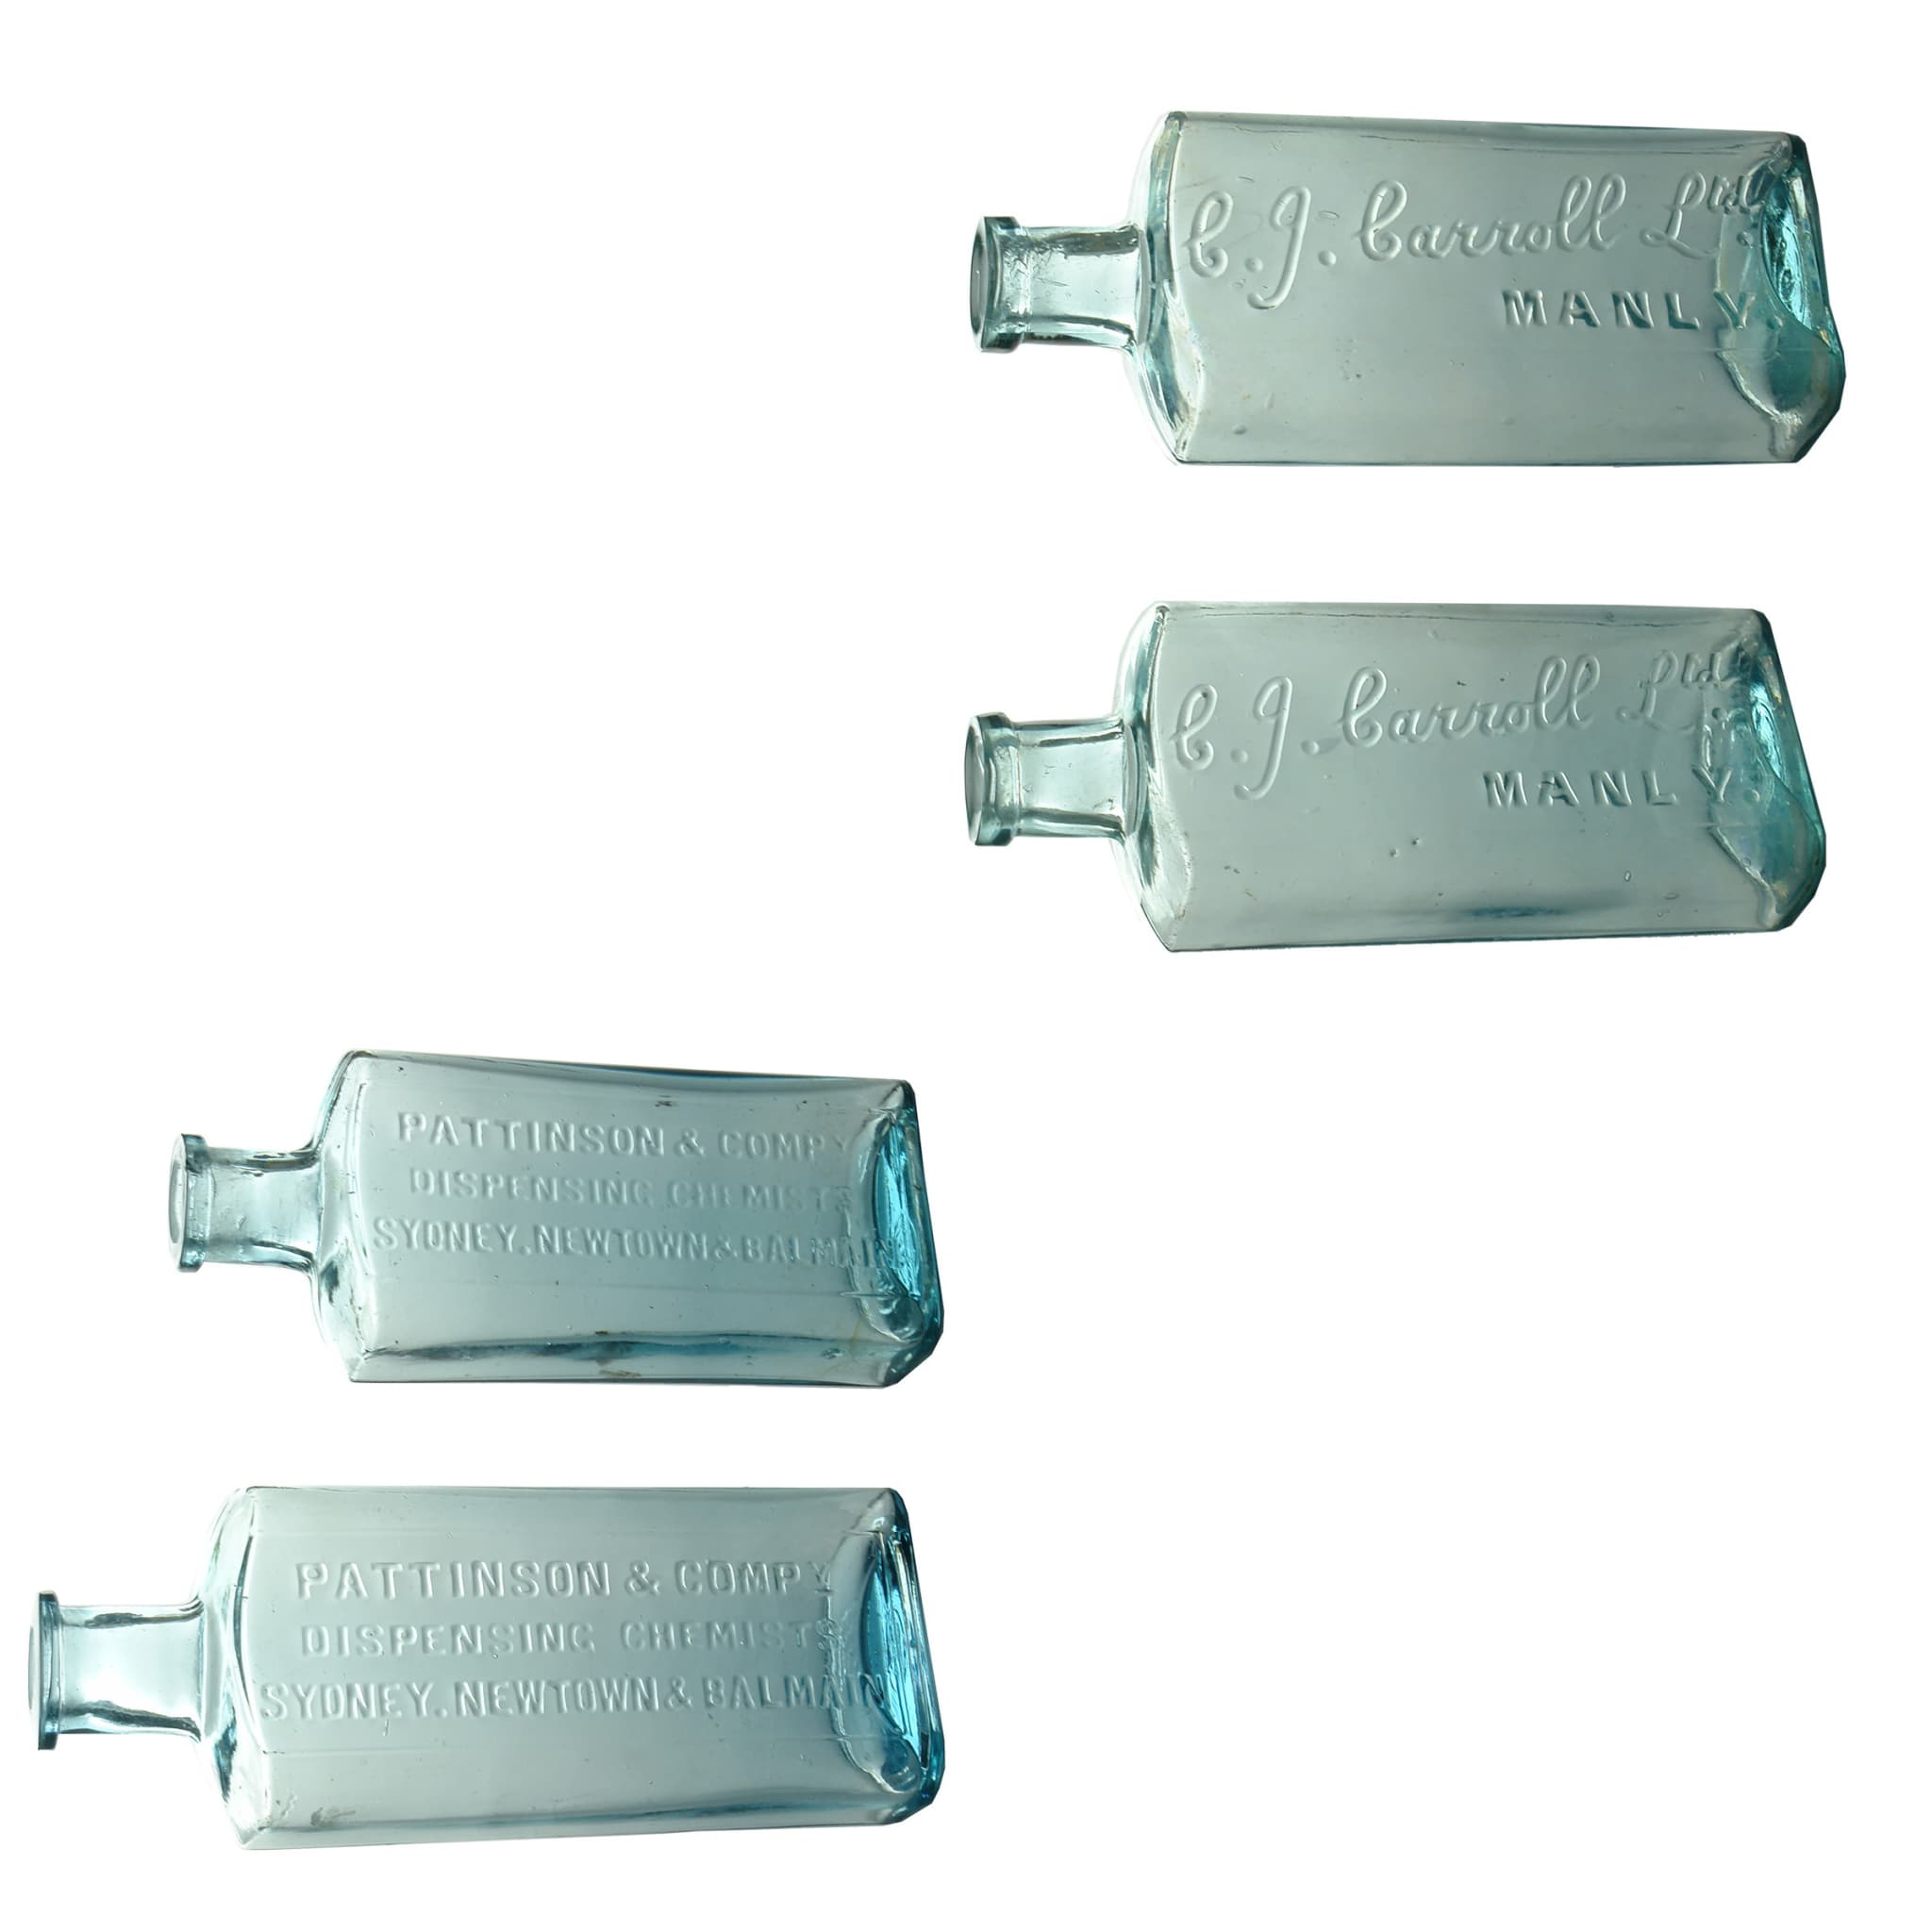 4 Chemist Bottles. Pattinson & Company, Sydney, Newtown & Balmain. 6 & 3 oz. 152 & 130 mm. C. J. Carroll, Manly both 3 oz 129 mm. (New South Wales)